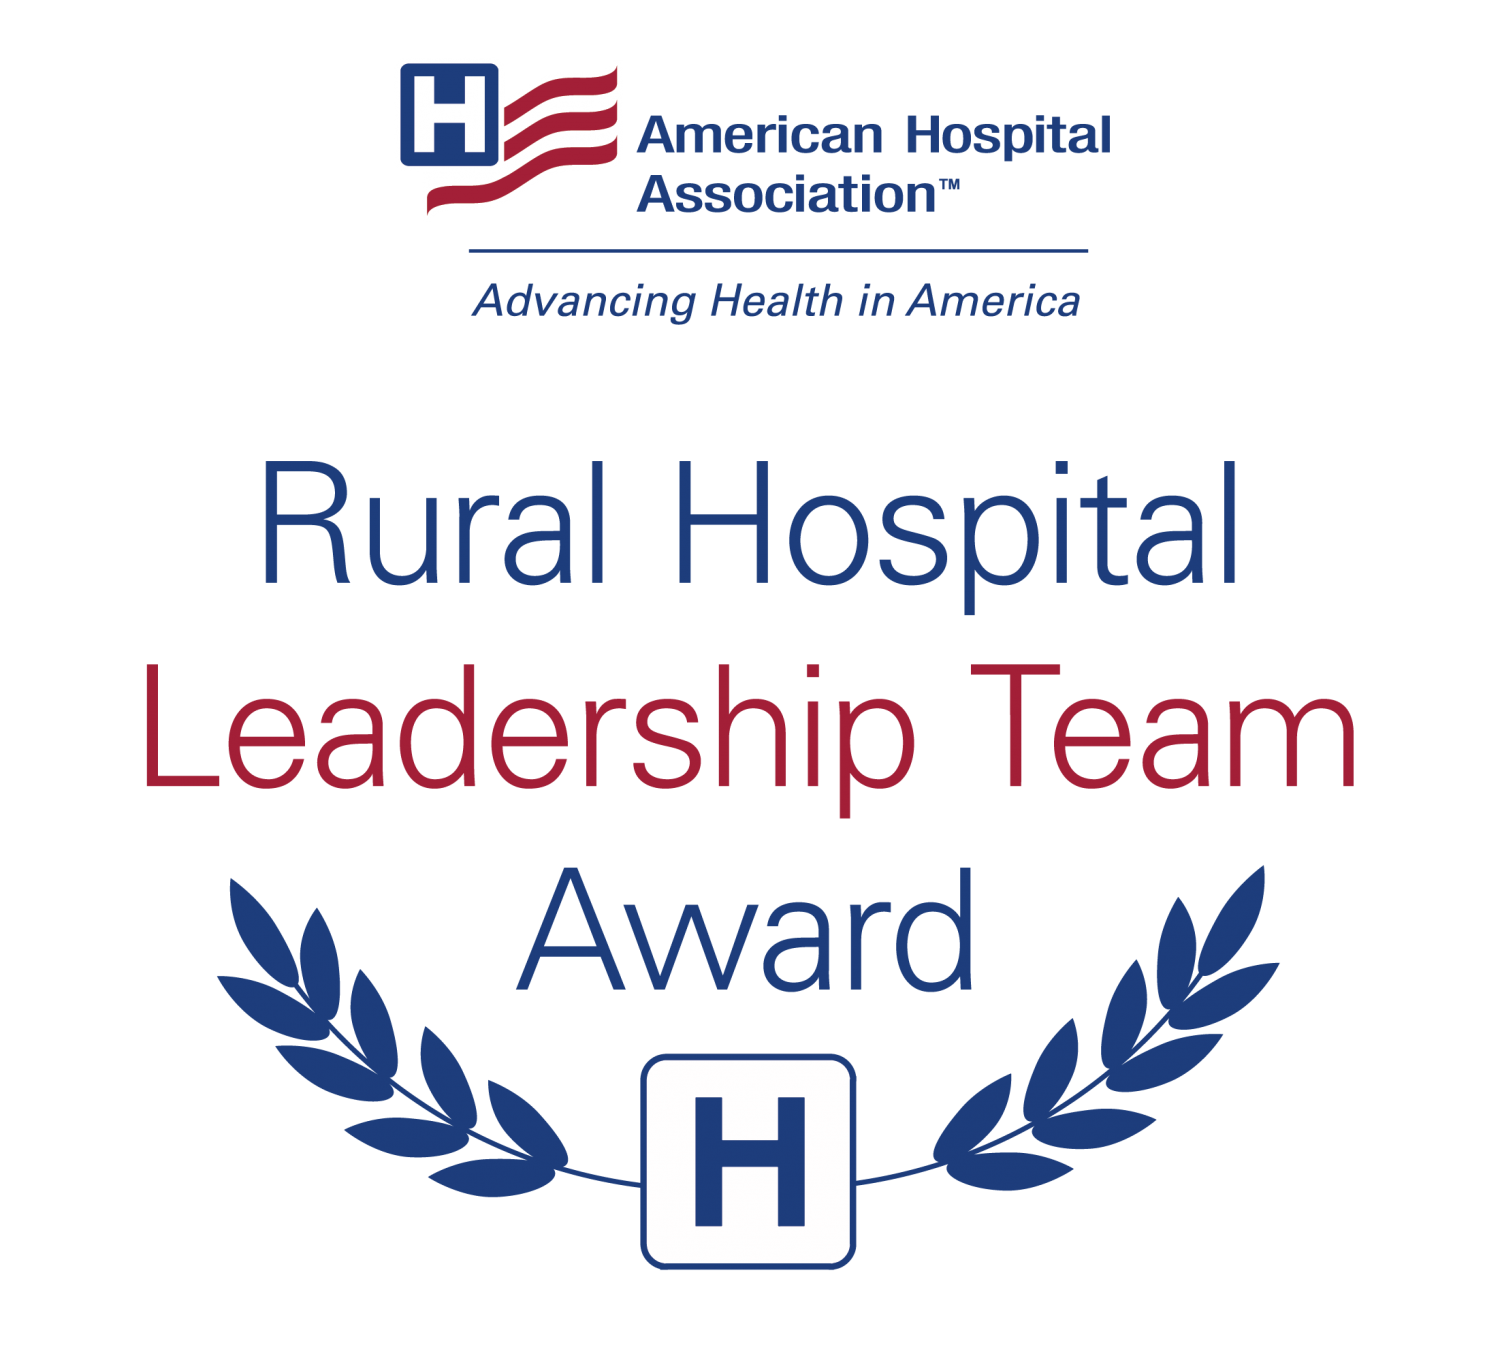 Rural Hospital Leadership Team Award. American Hospital Association.